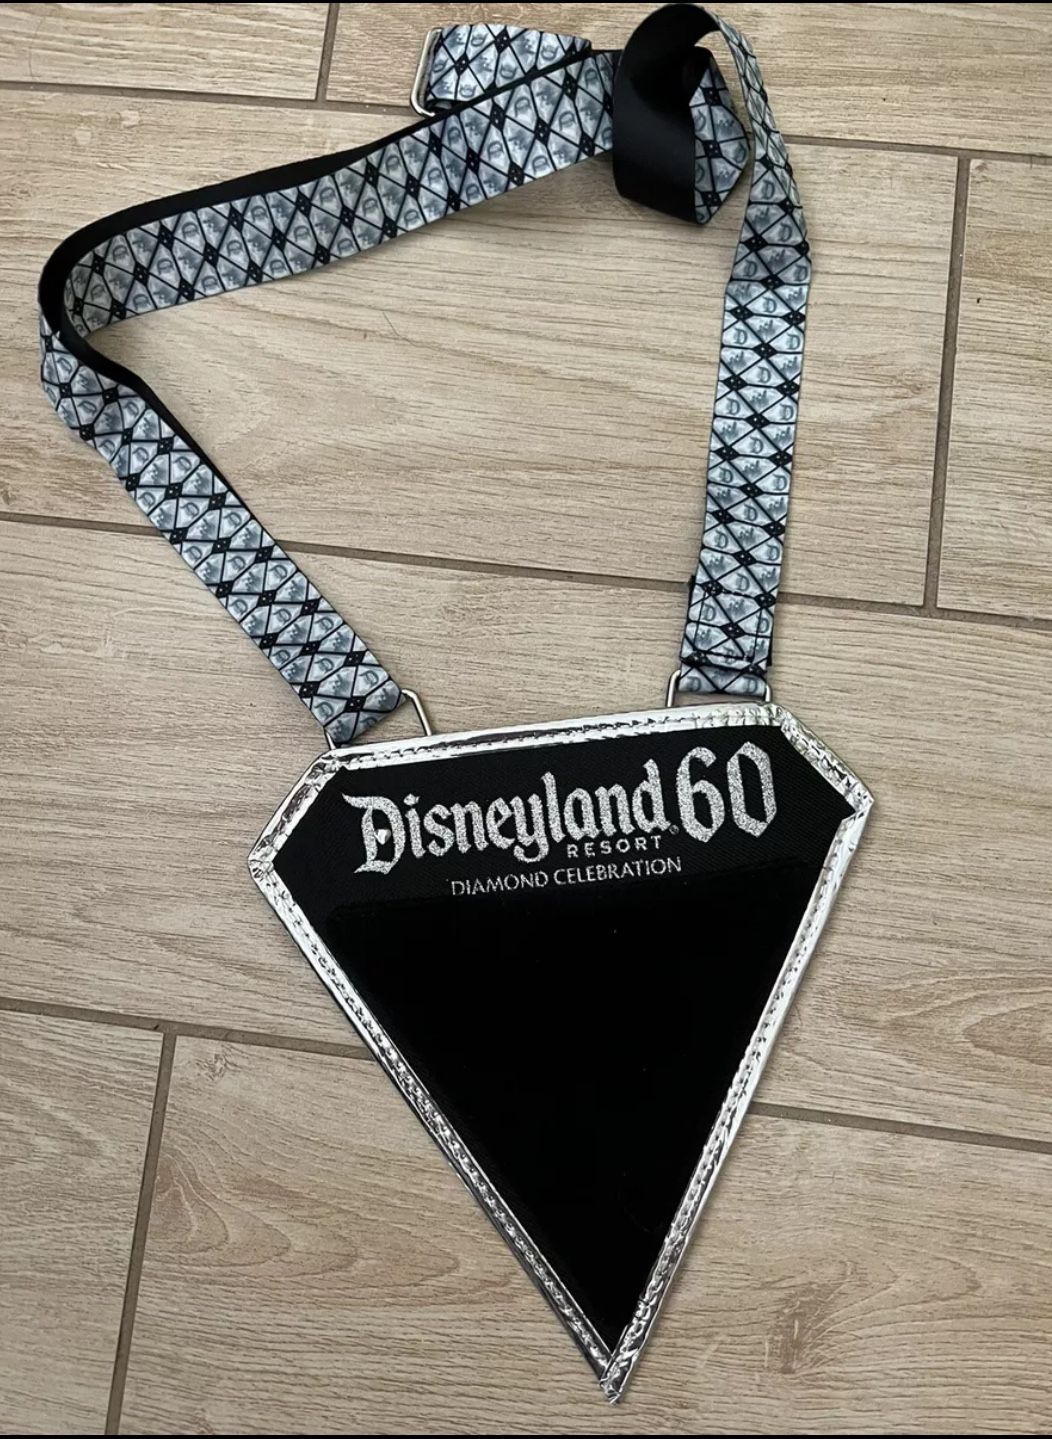 Disneyland Resort 60th Diamond Celebration Pin Lanyard - Never Used